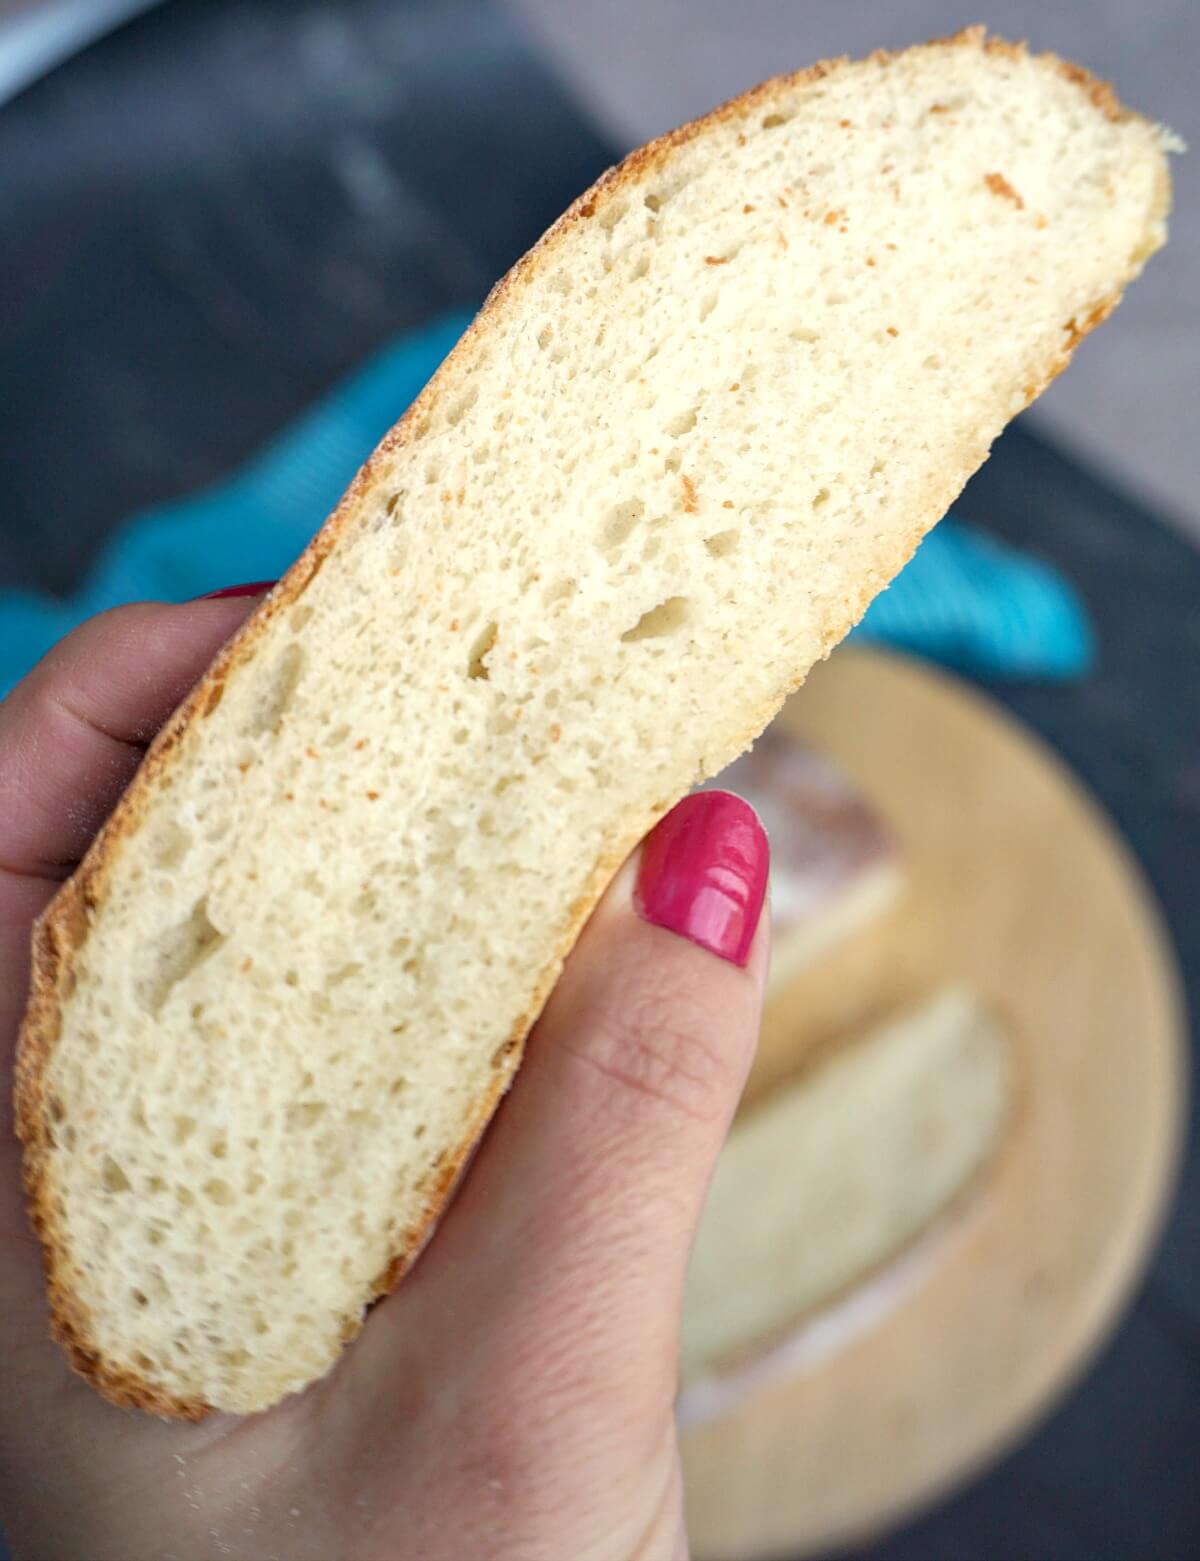 A hand holding a slice of potato bread